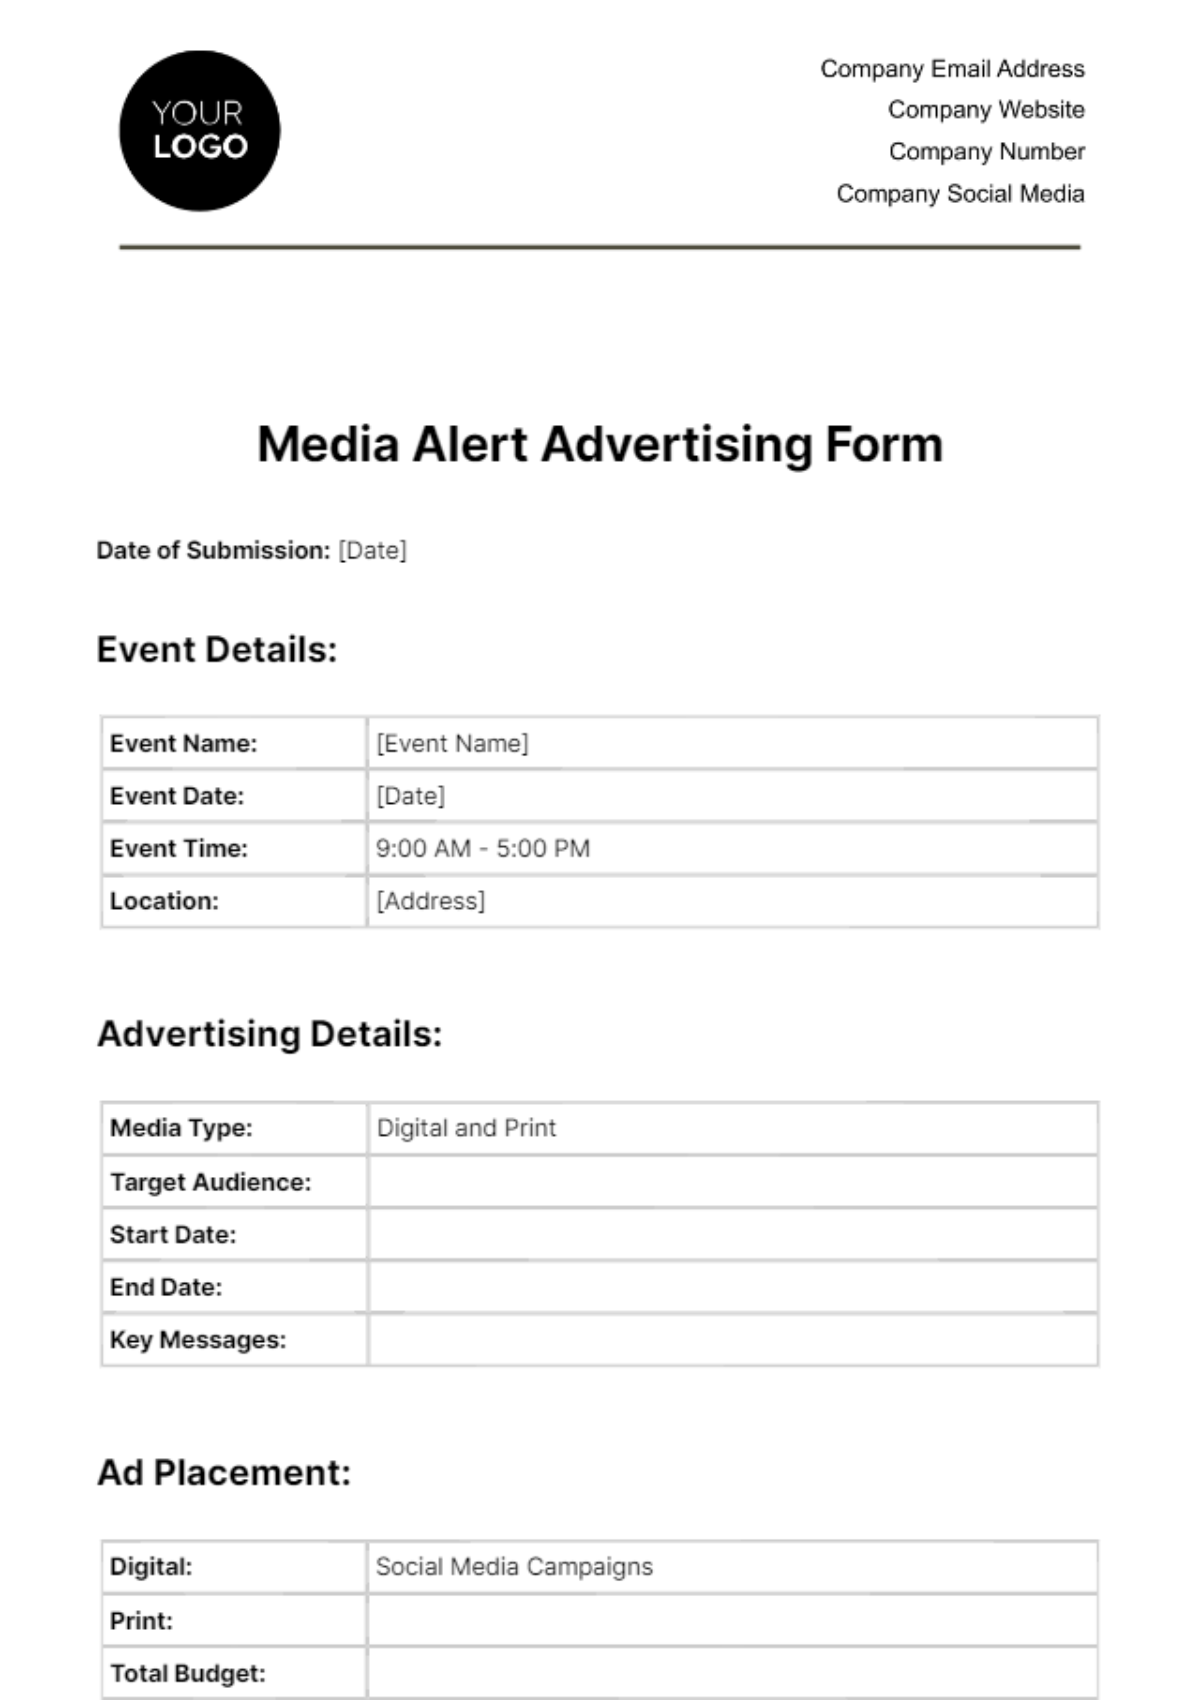 Media Alert Advertising Form Template